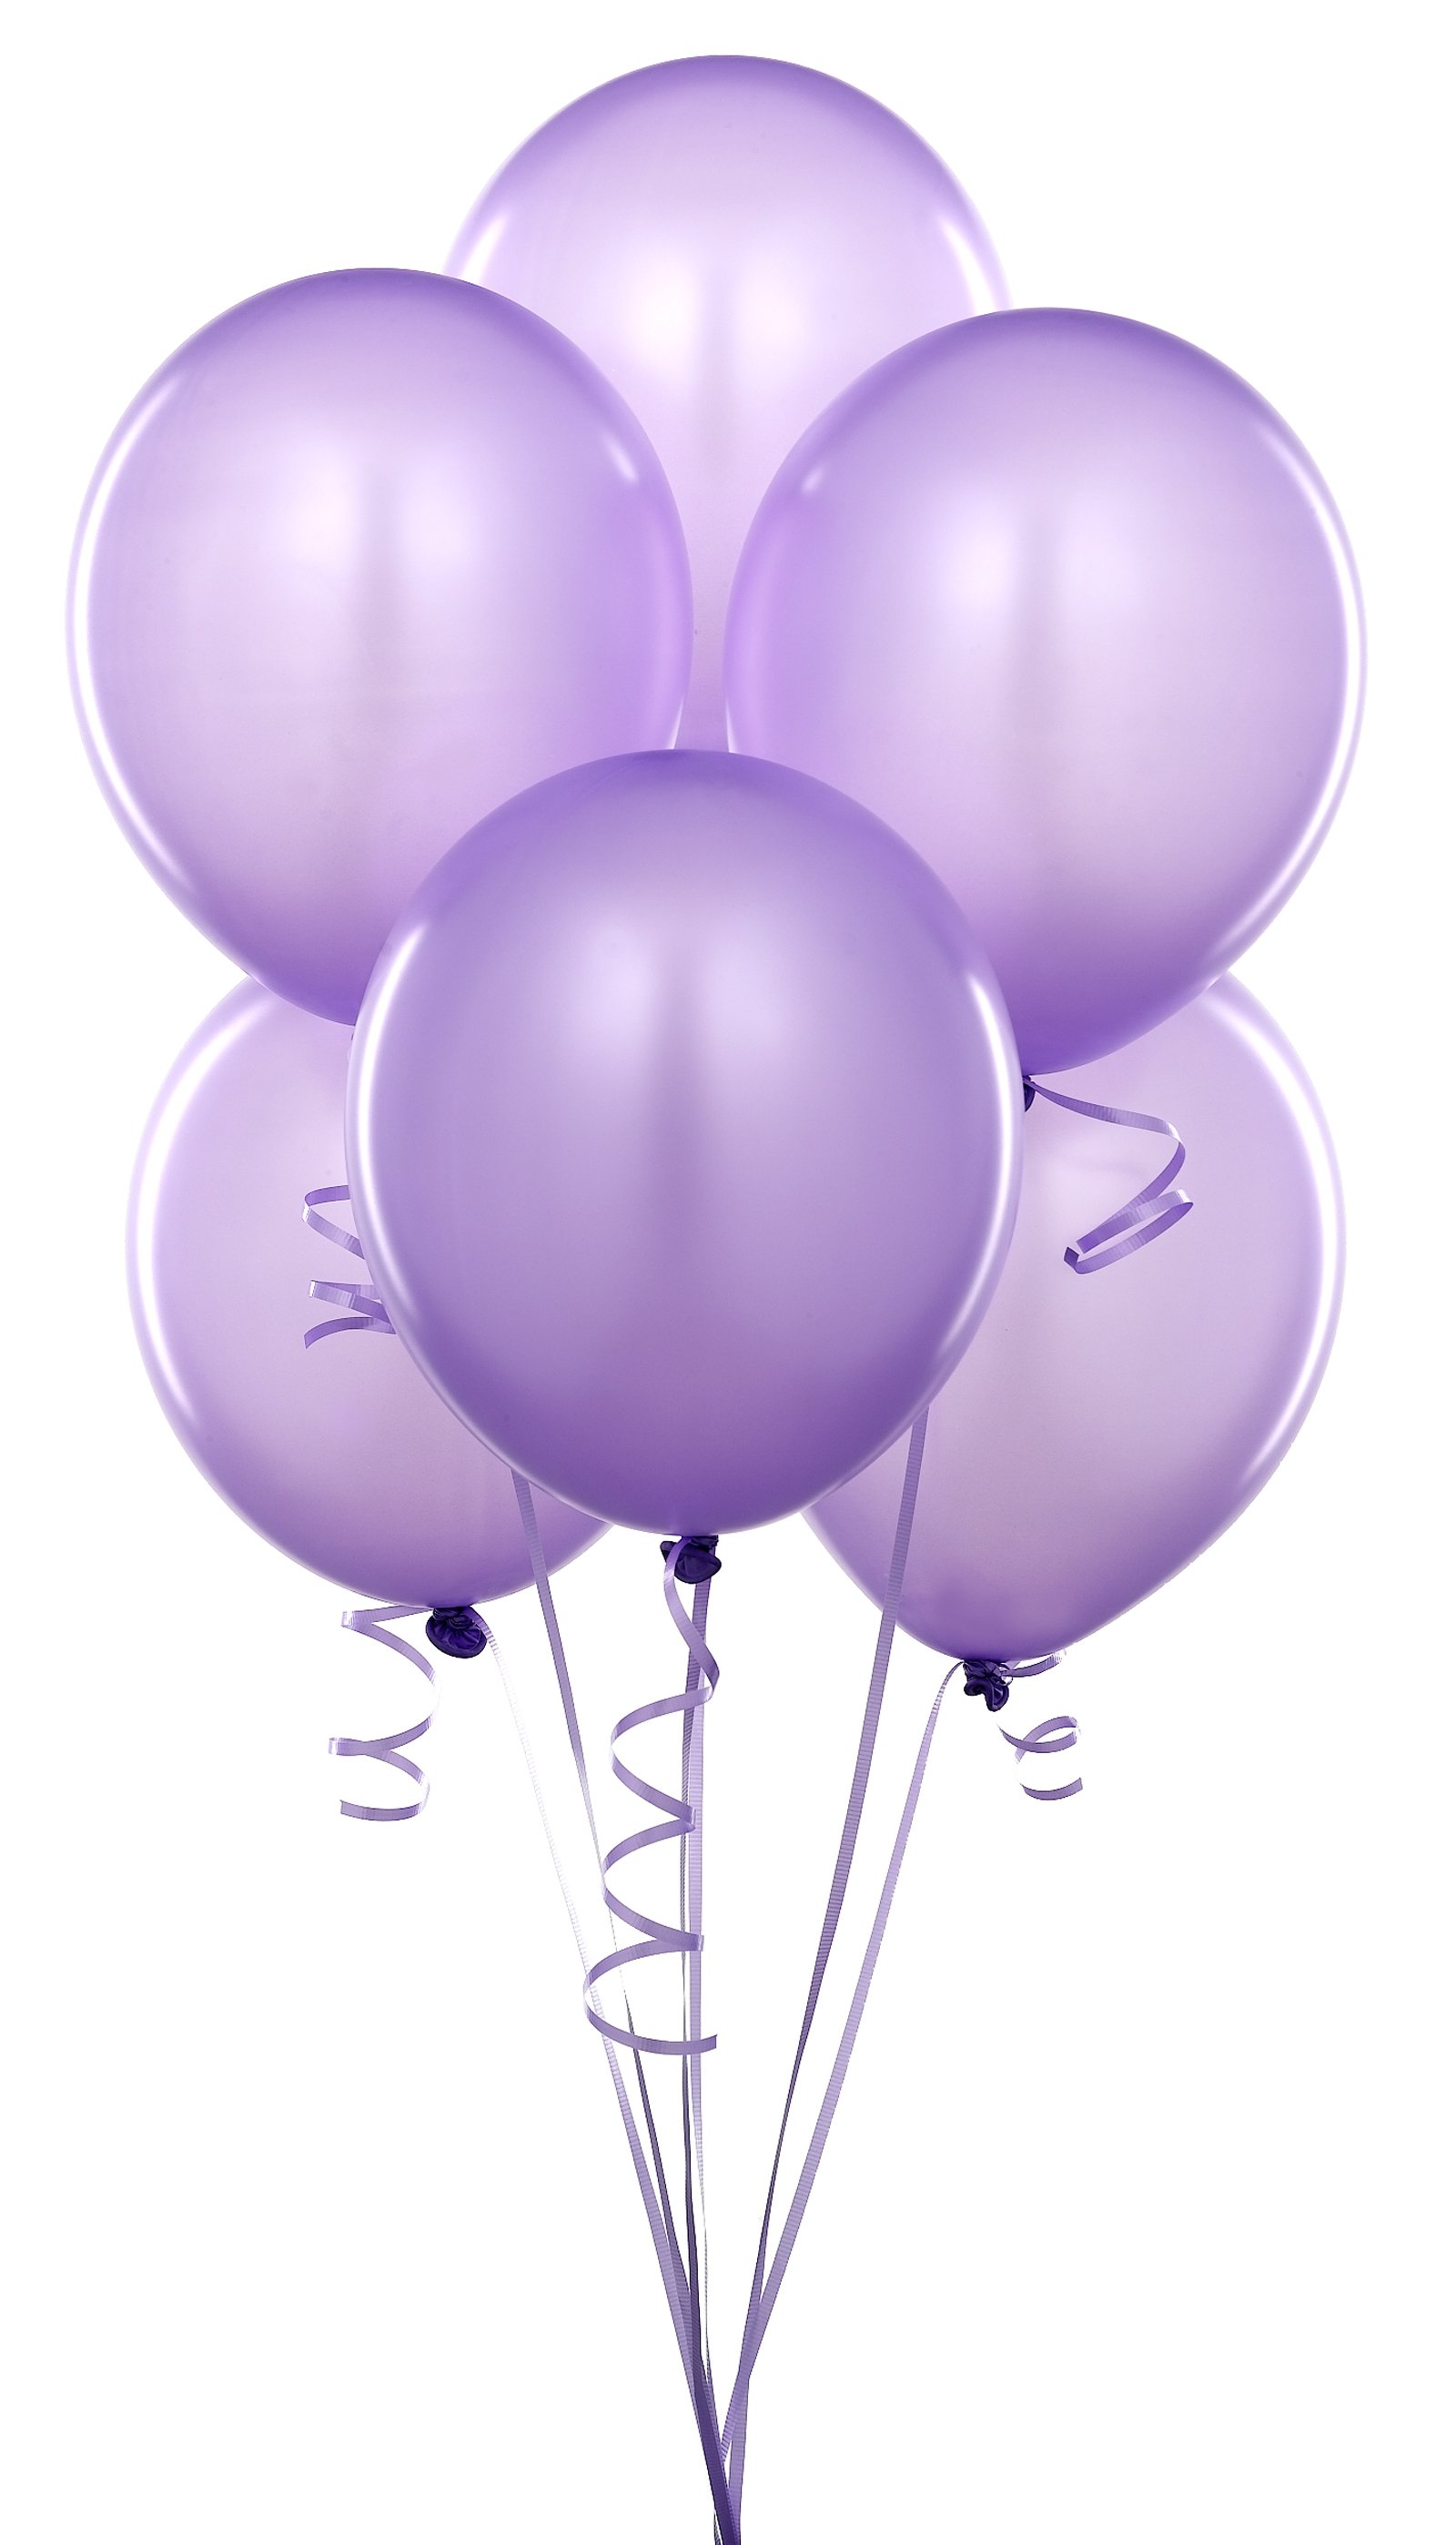 purple balloons, Gallery of Diamonds, Newport Beach, Jewelry, Vintage, Estate, Custom, balloons, purple